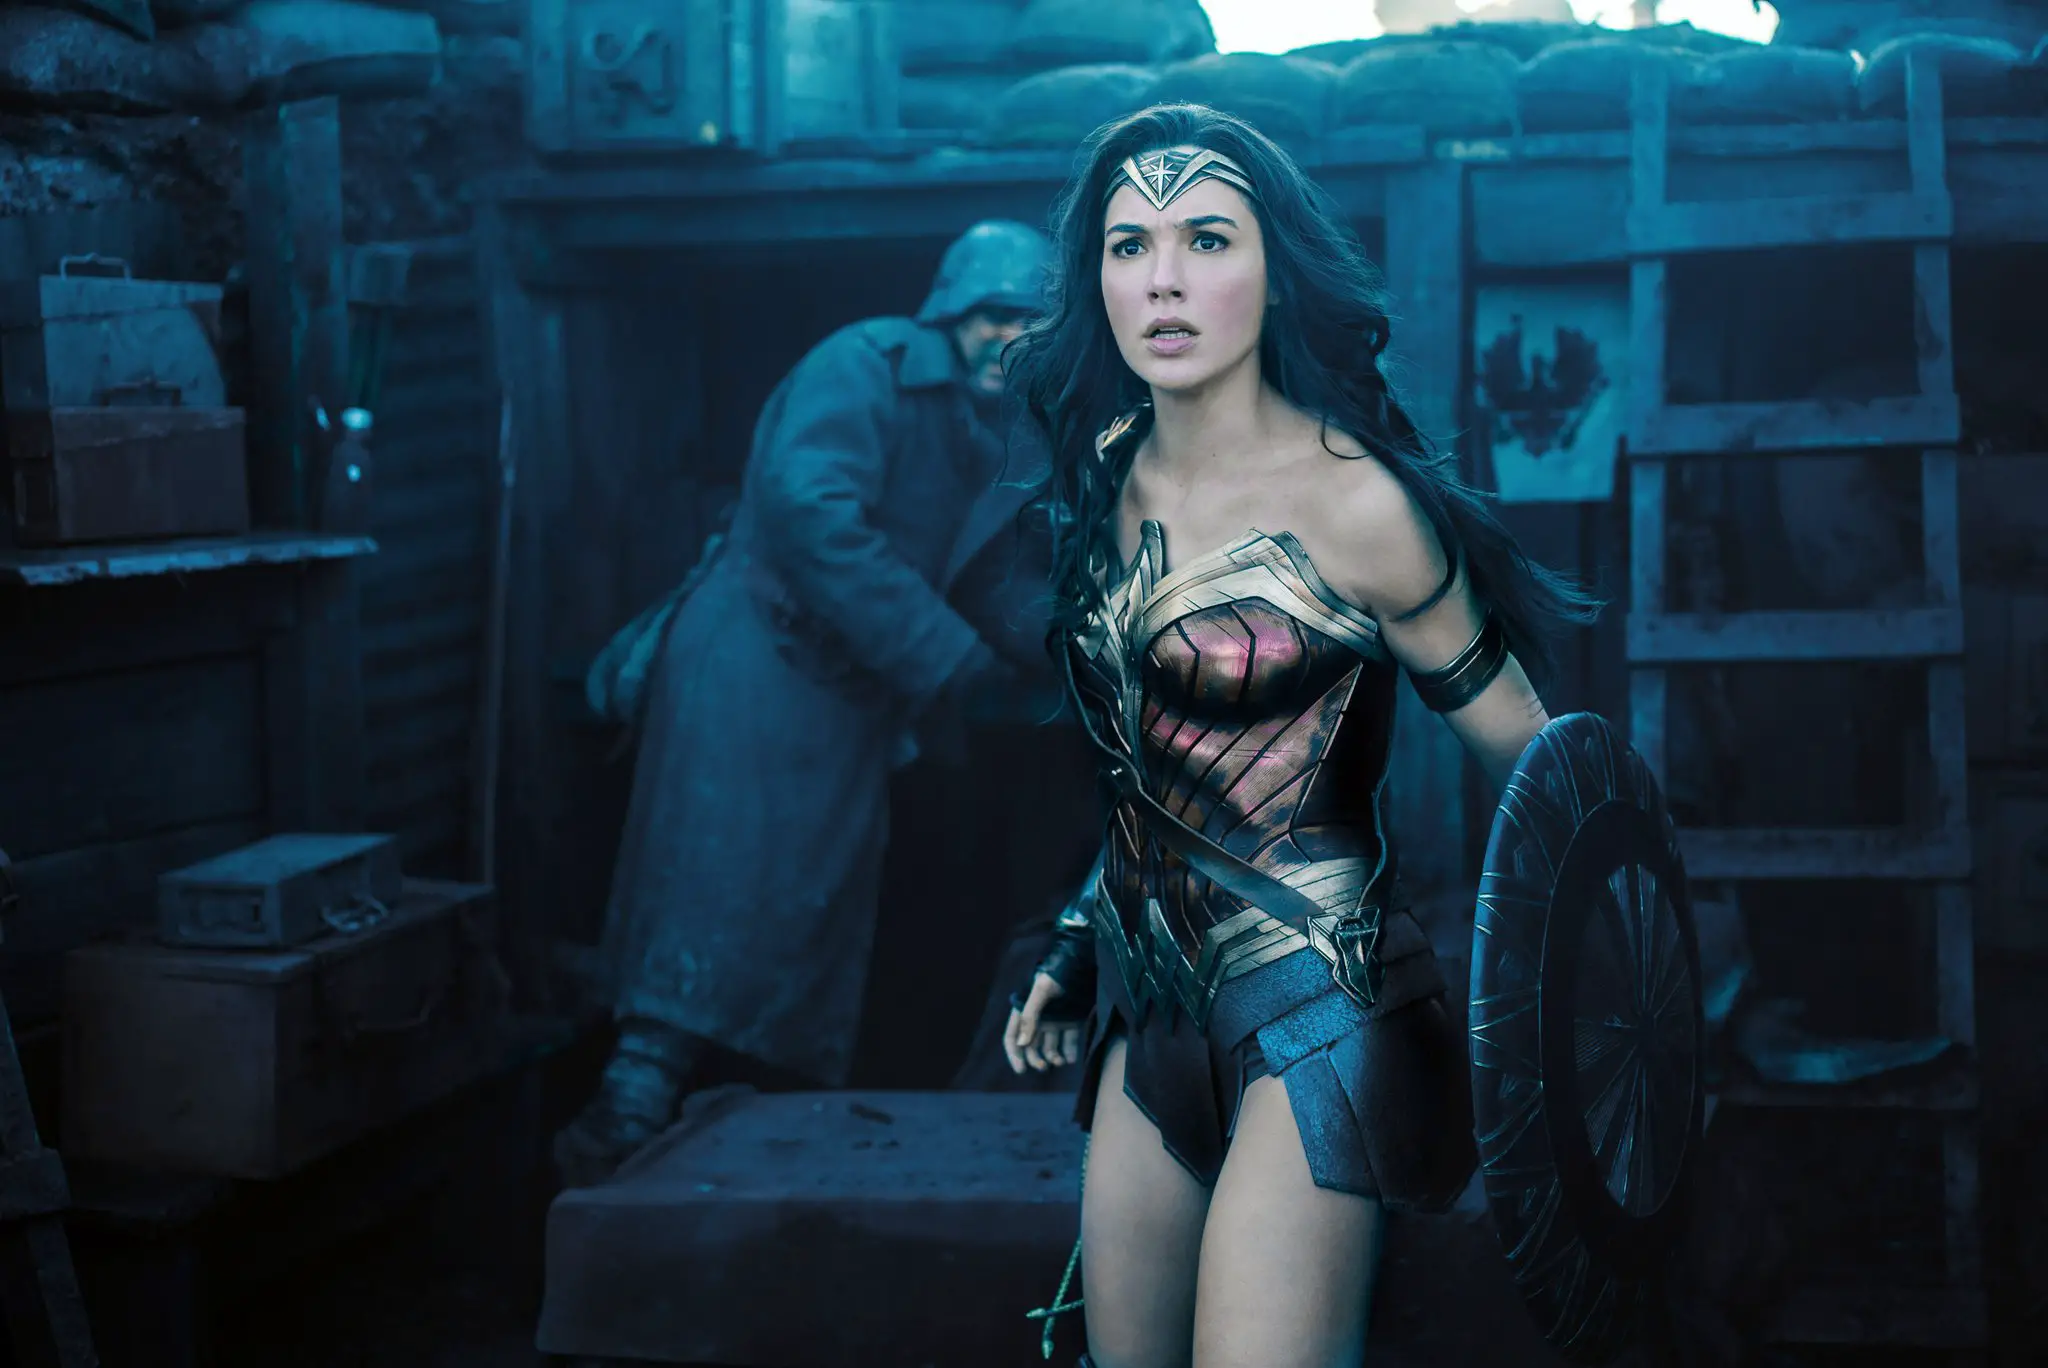 Why Didn't Wonder Woman Get A Golden Globe Nomination?